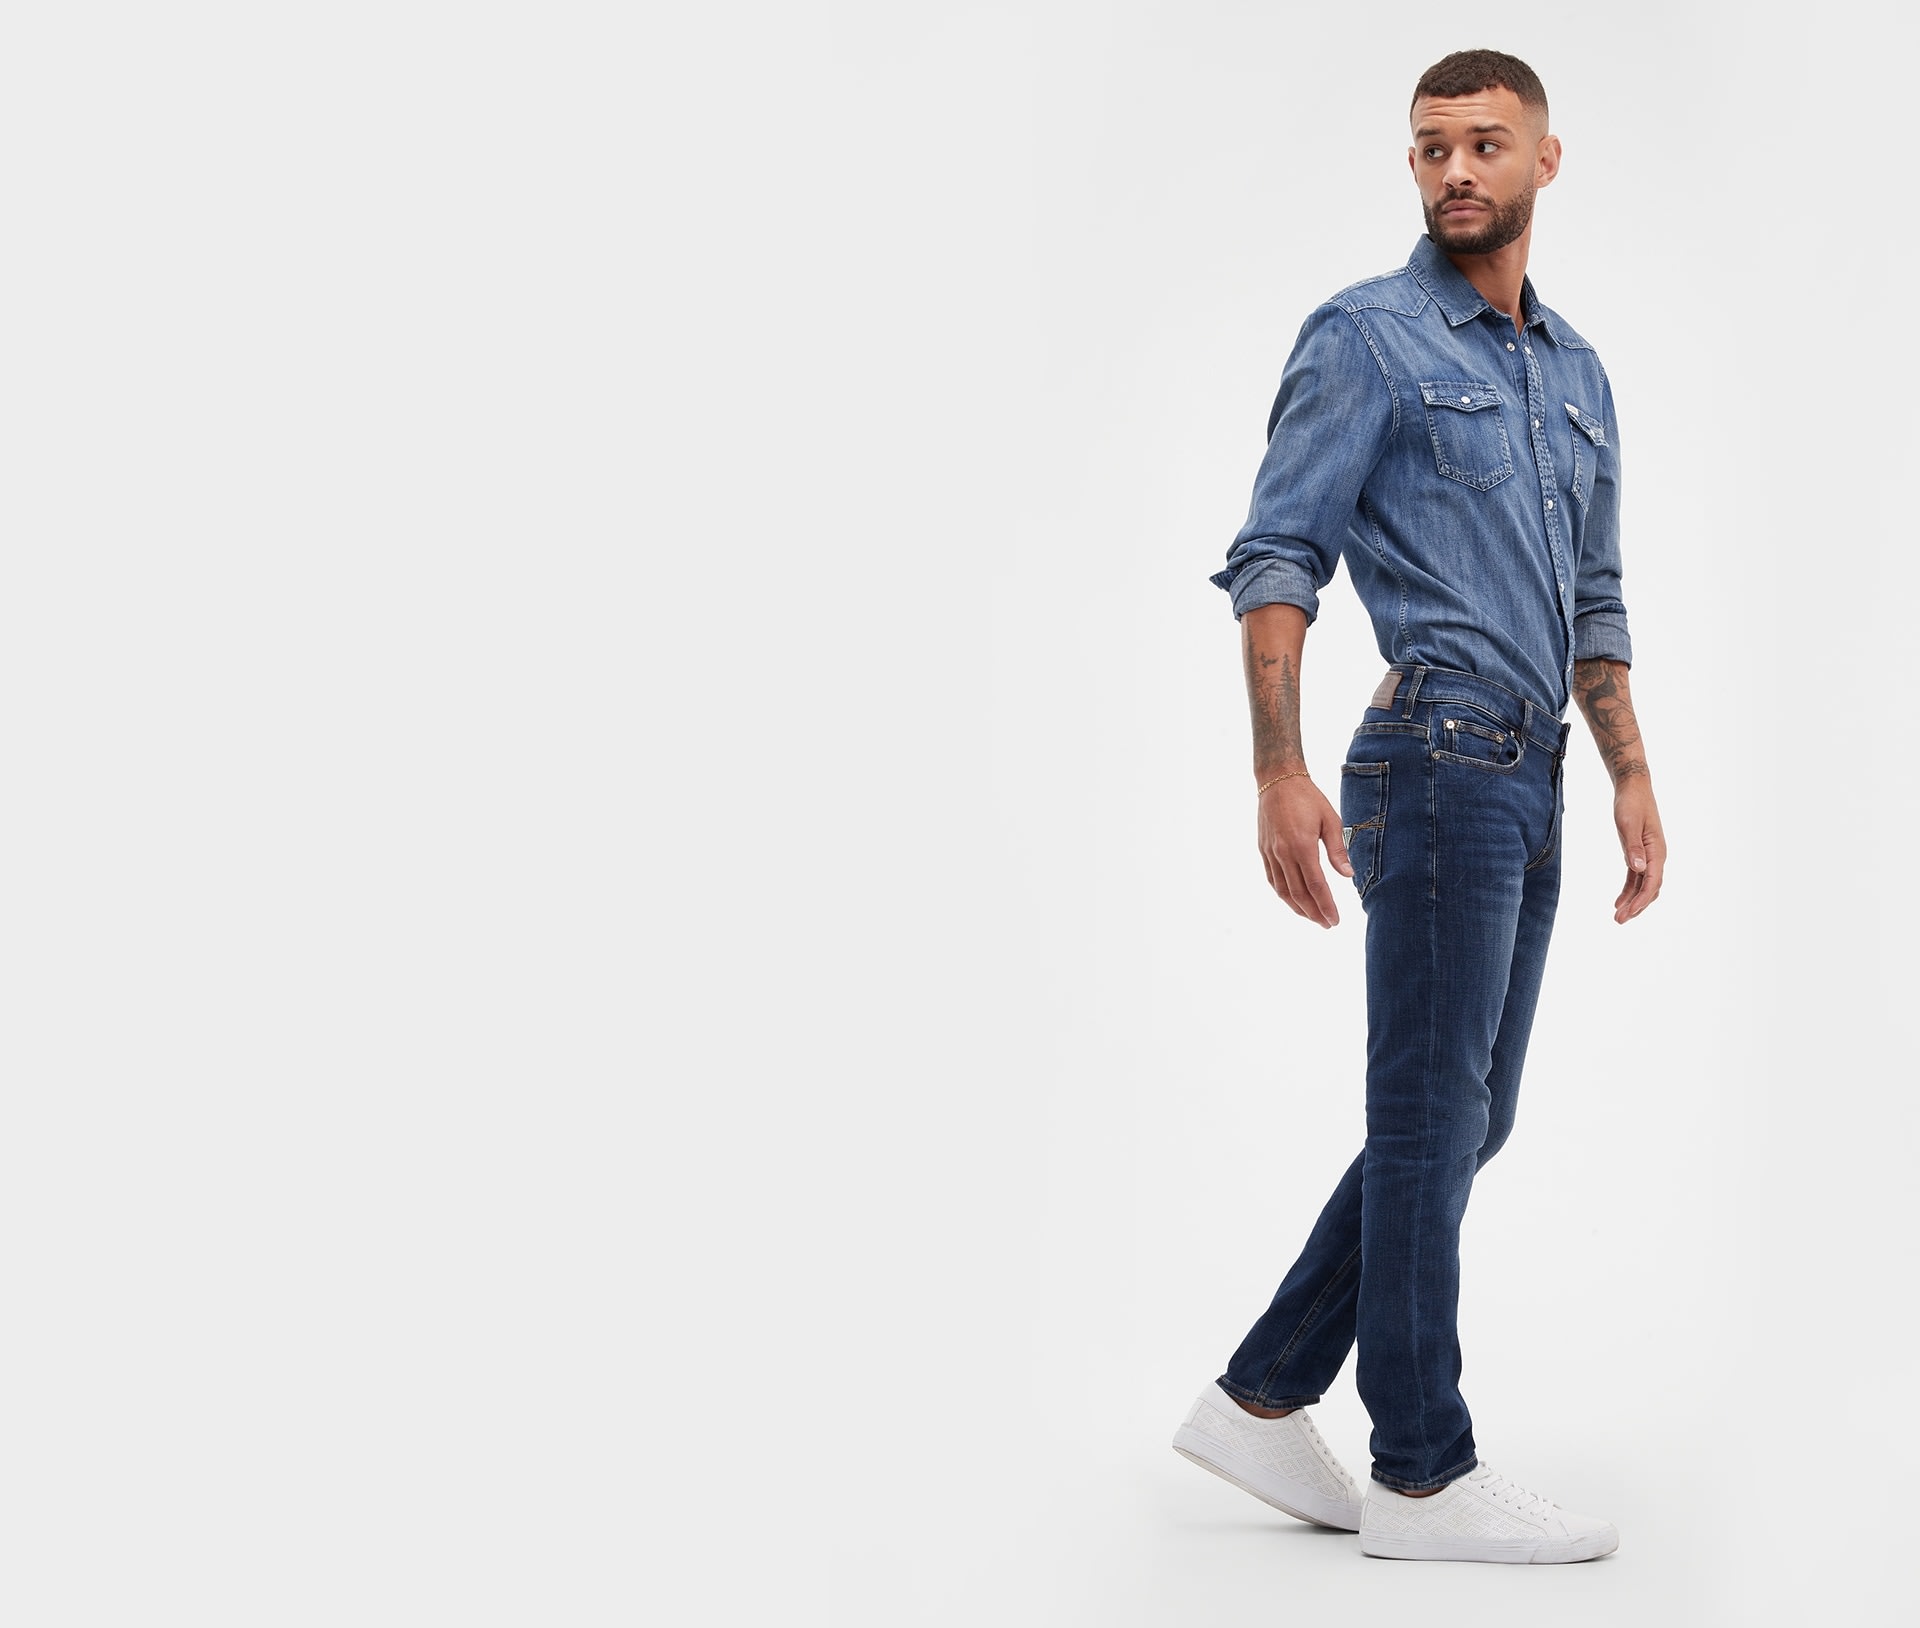 The Denim Guide: Skinny Jeans